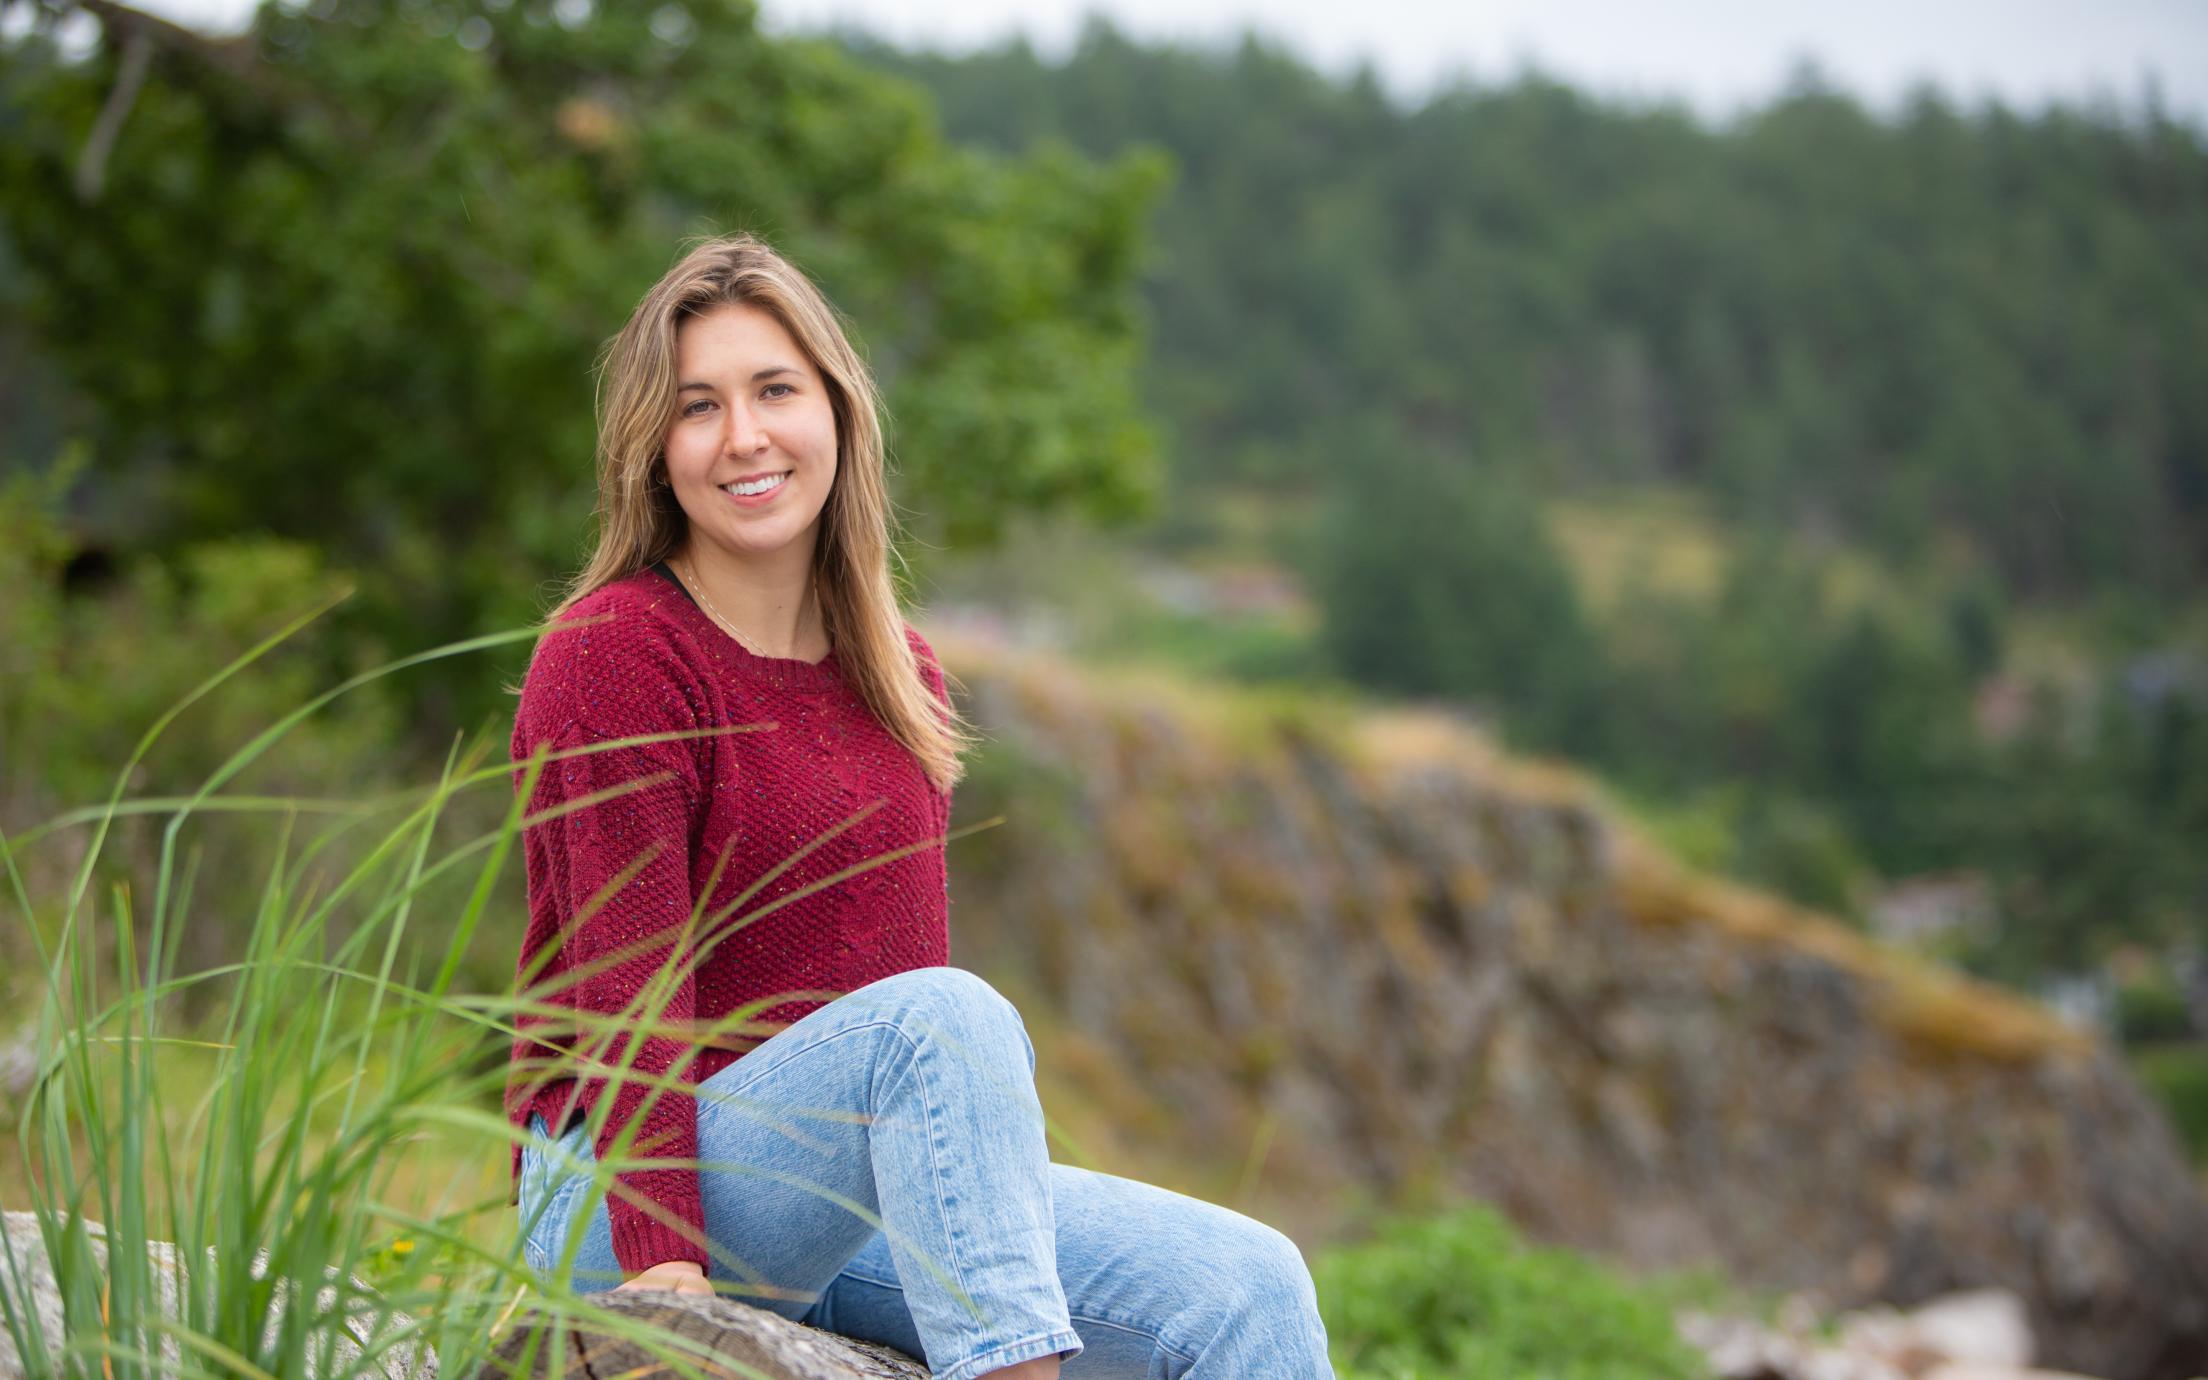 Portrait of Marissa sitting on grass smiling at camera